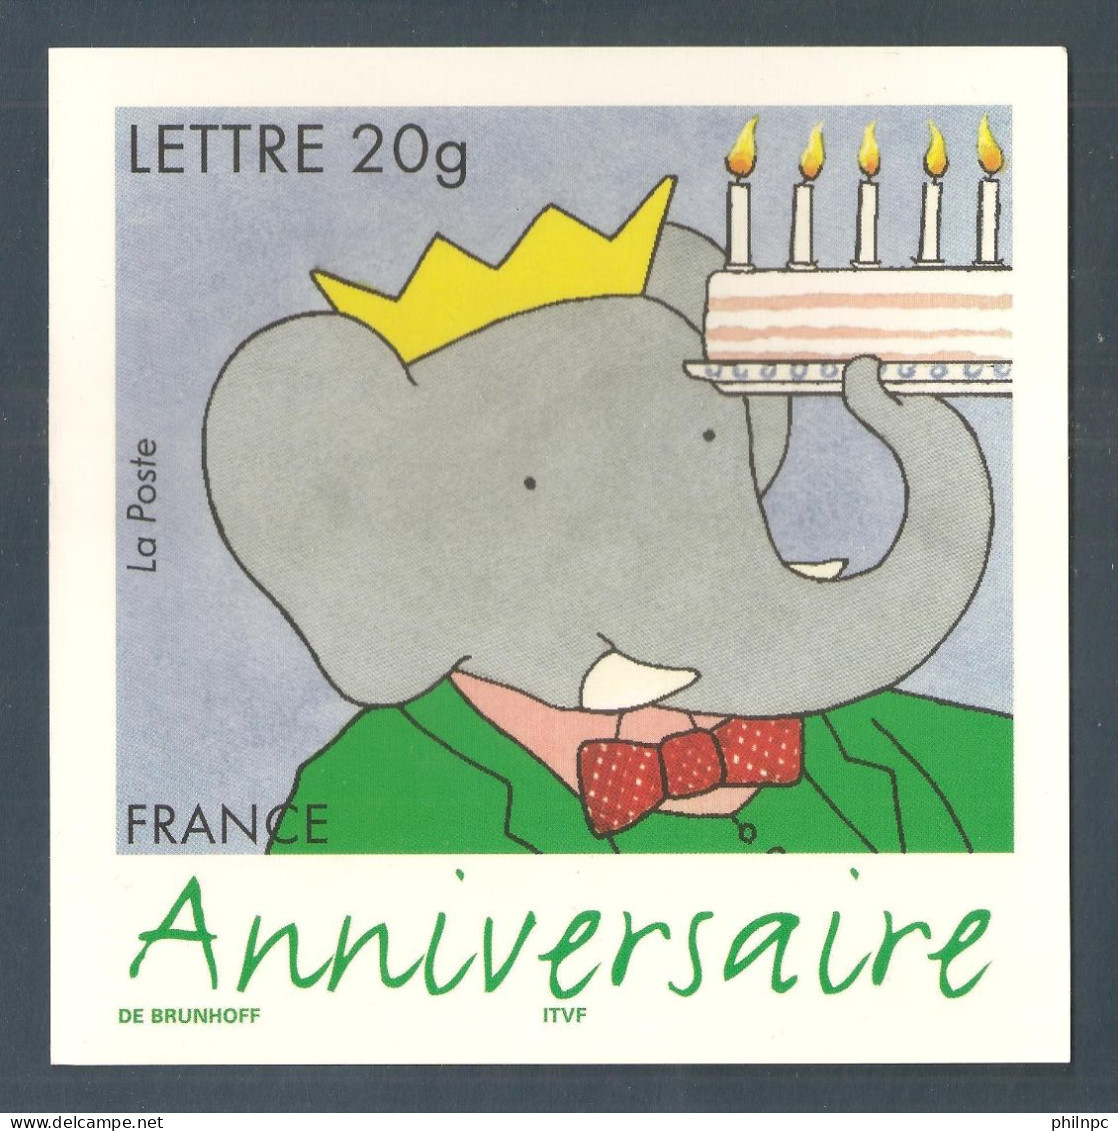 France, Entier Postal, Carte Postale, 3927, Anniversaires, Eléphant Babar, Neuf, TTB - Sonderganzsachen